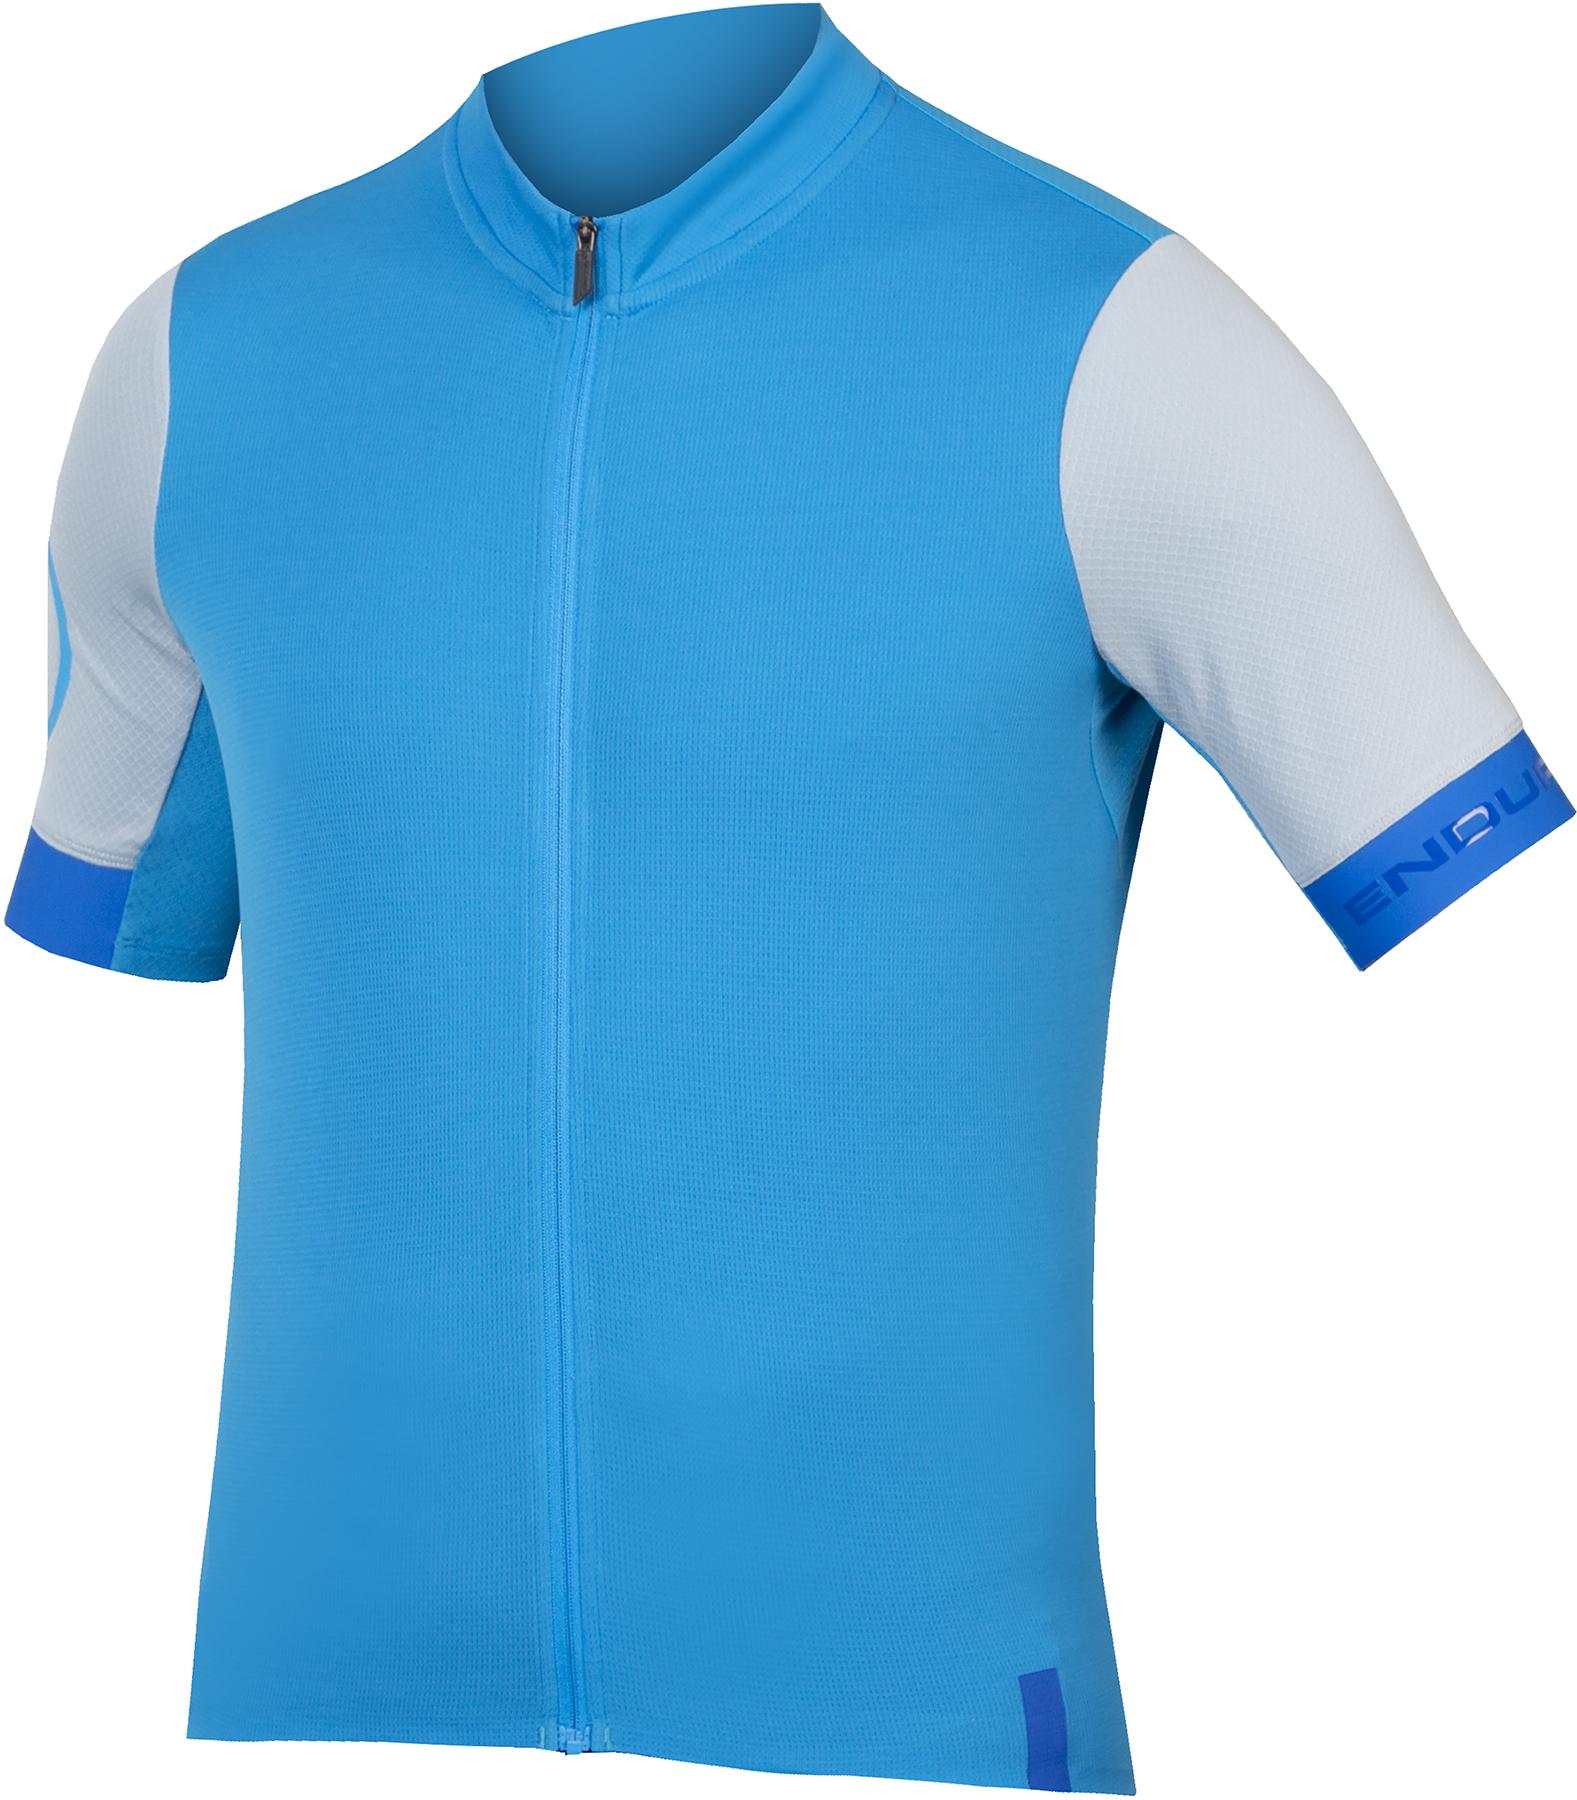 Endura Fs260 Short Sleeve Cycling Jersey  Hi-viz Blue